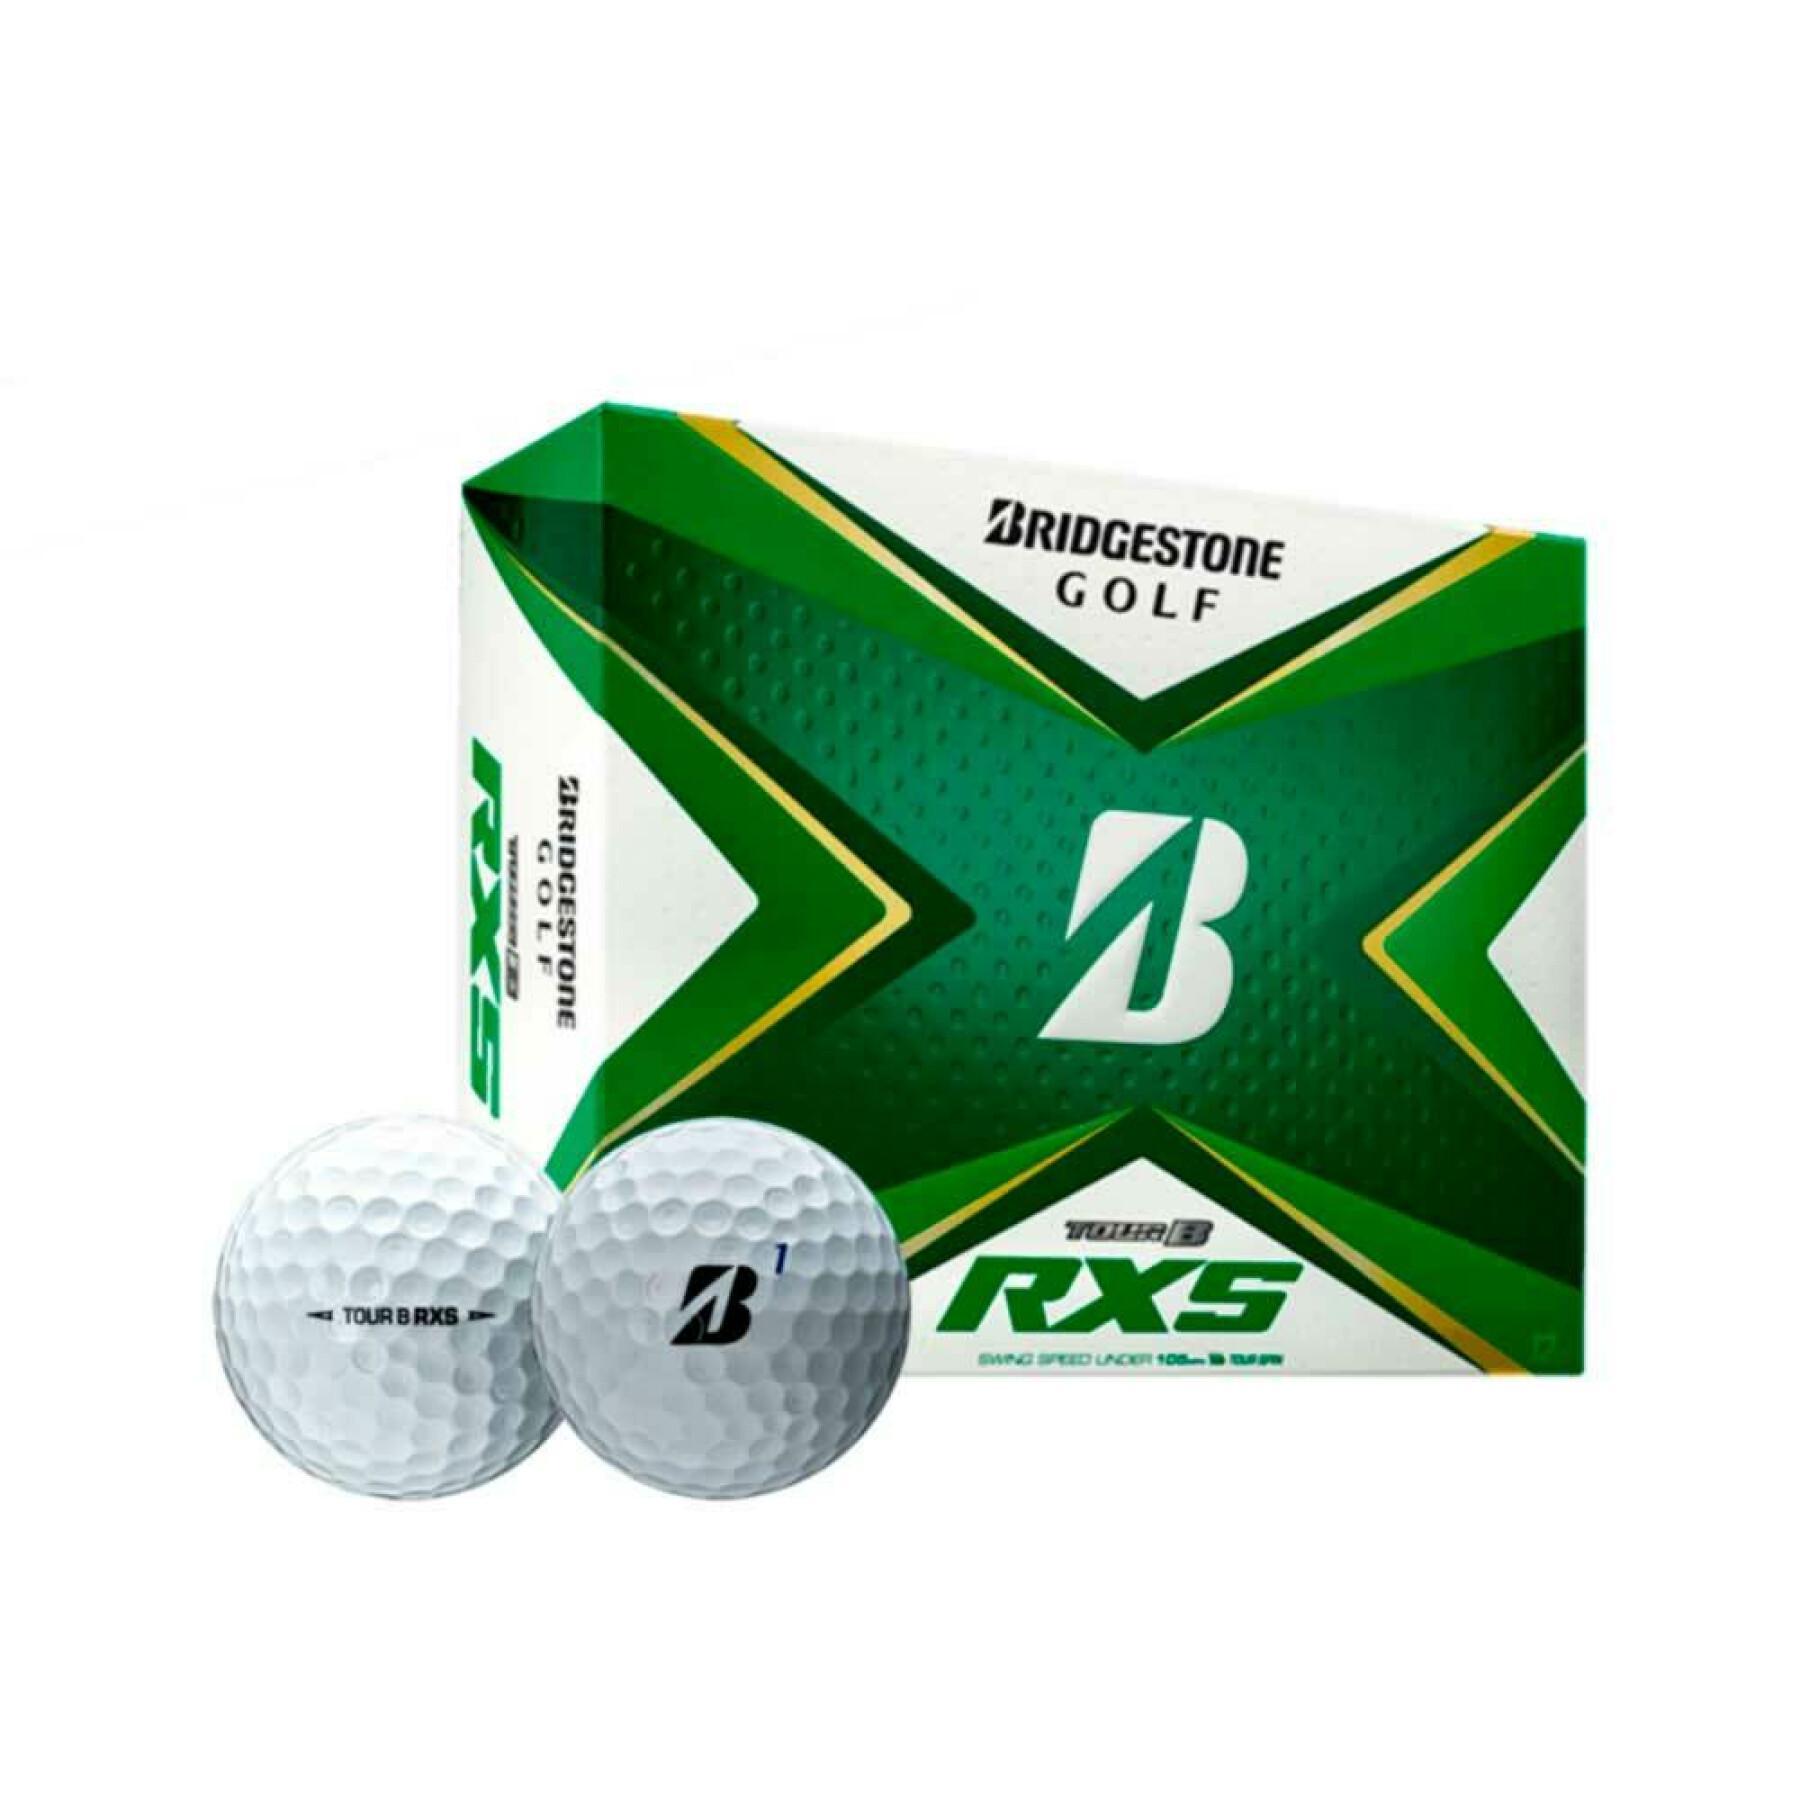 Golfbollar Bridgestone Tour B RXS